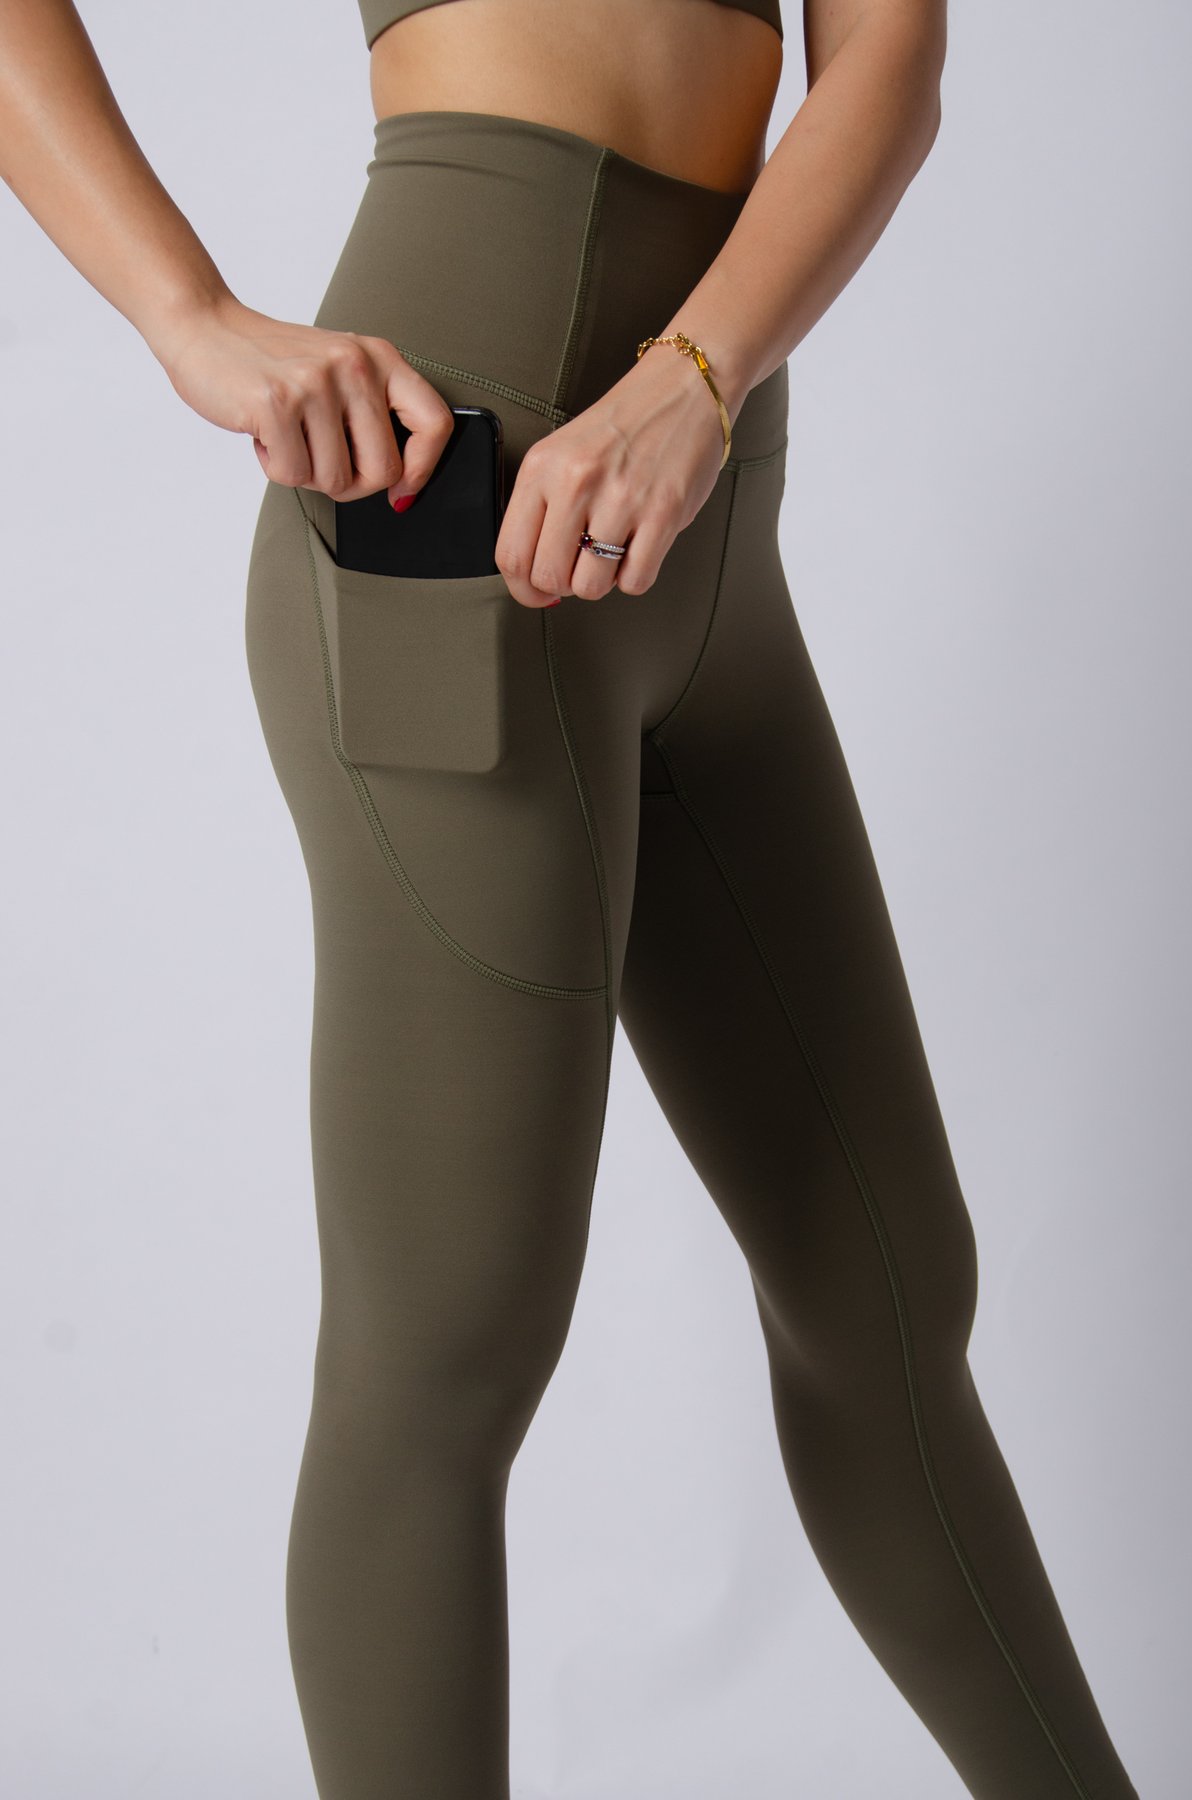 The Pocket Rocket Legging - Grey – Avo Activewear